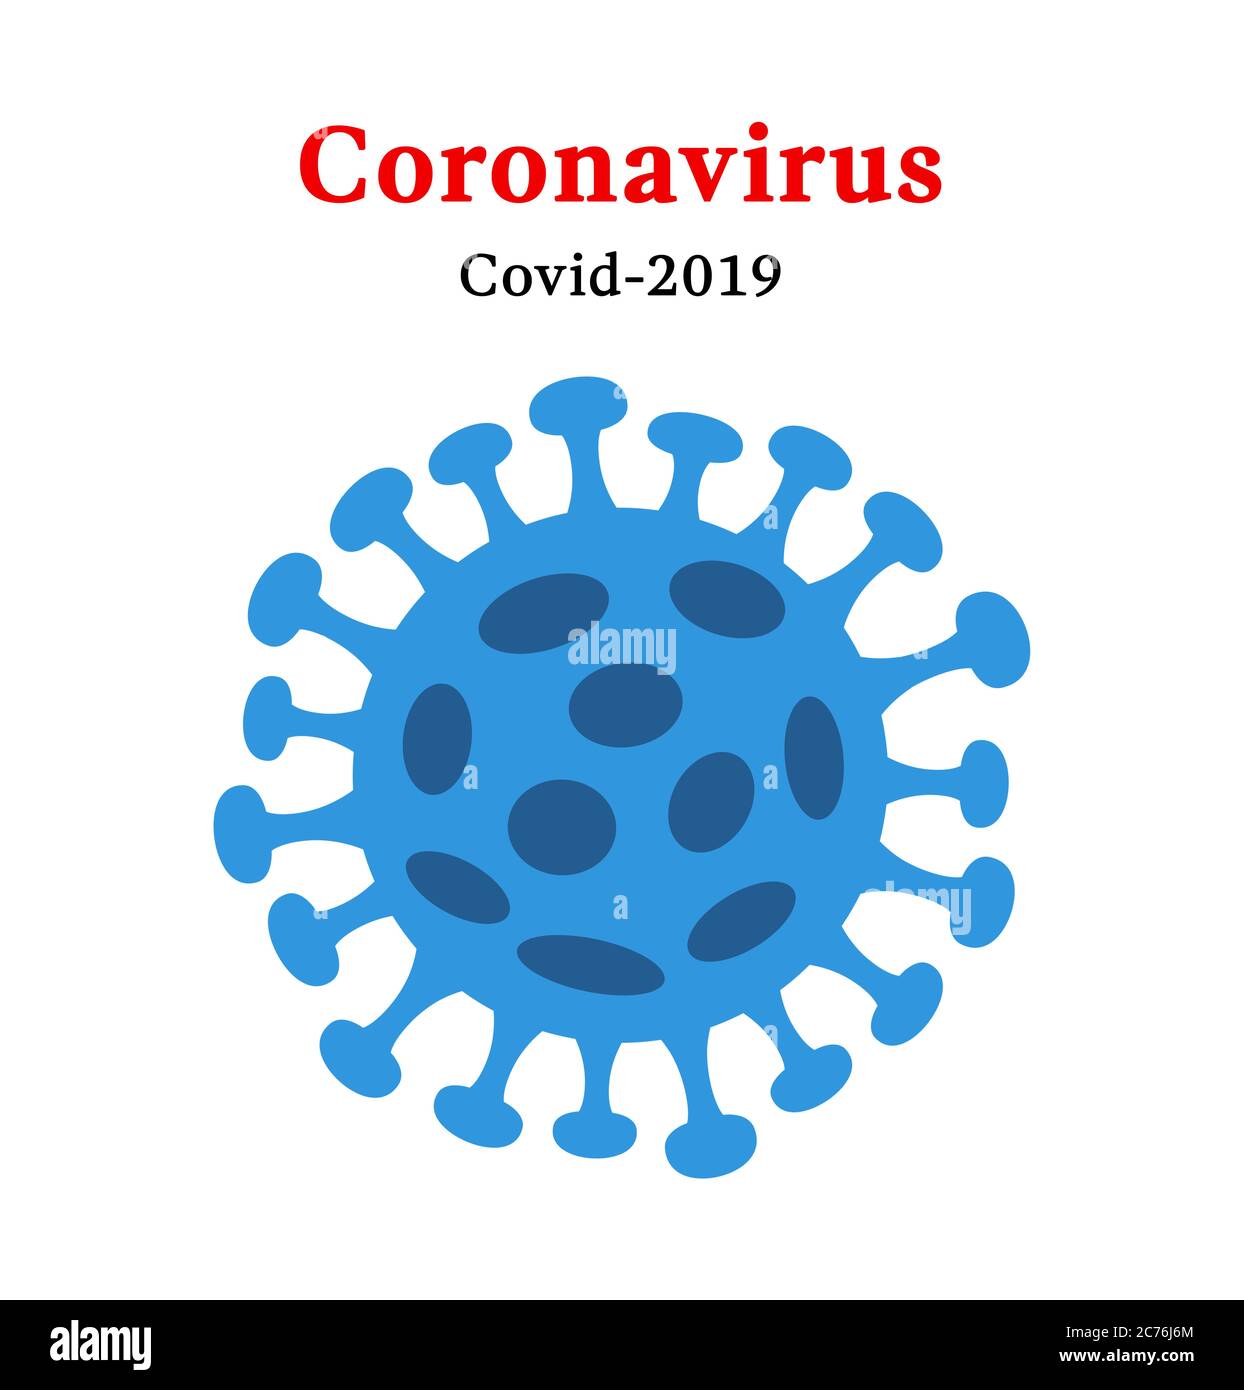 Resumen virus cepa modelo Novel coronavirus 2019-nCoV. El peligro del coronavirus y el riesgo para la salud pública. Concepto médico pandémico con peligro Foto de stock